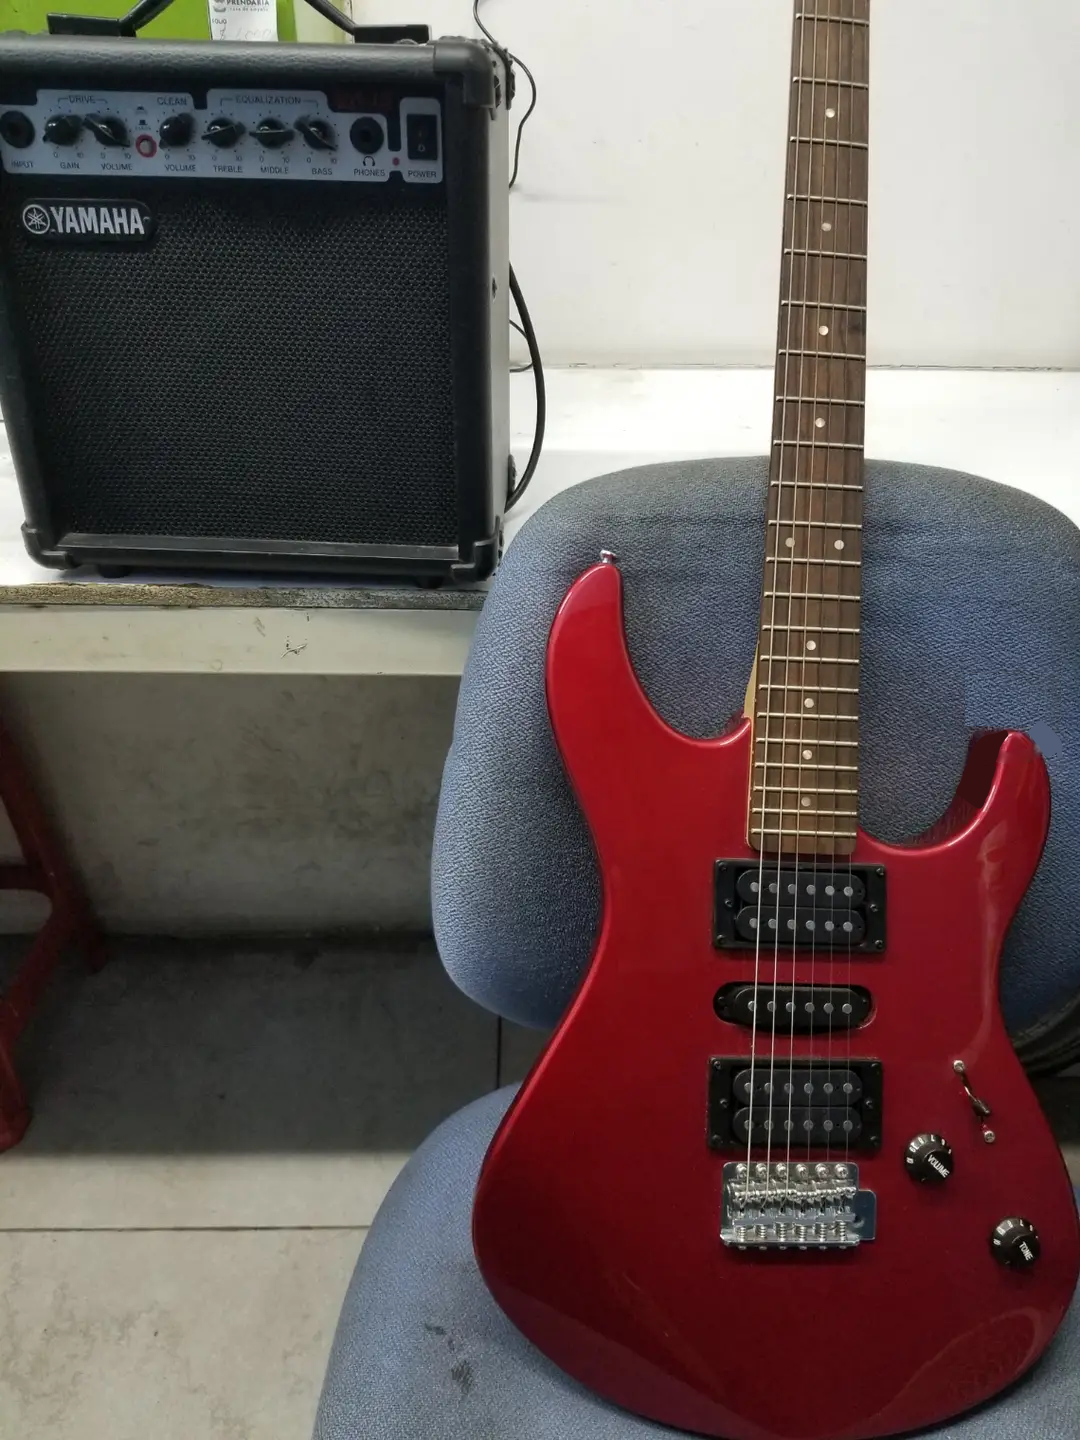 Yamaha ERG121GPIIMR Paquete de Guitarra Eléctrica color rojo